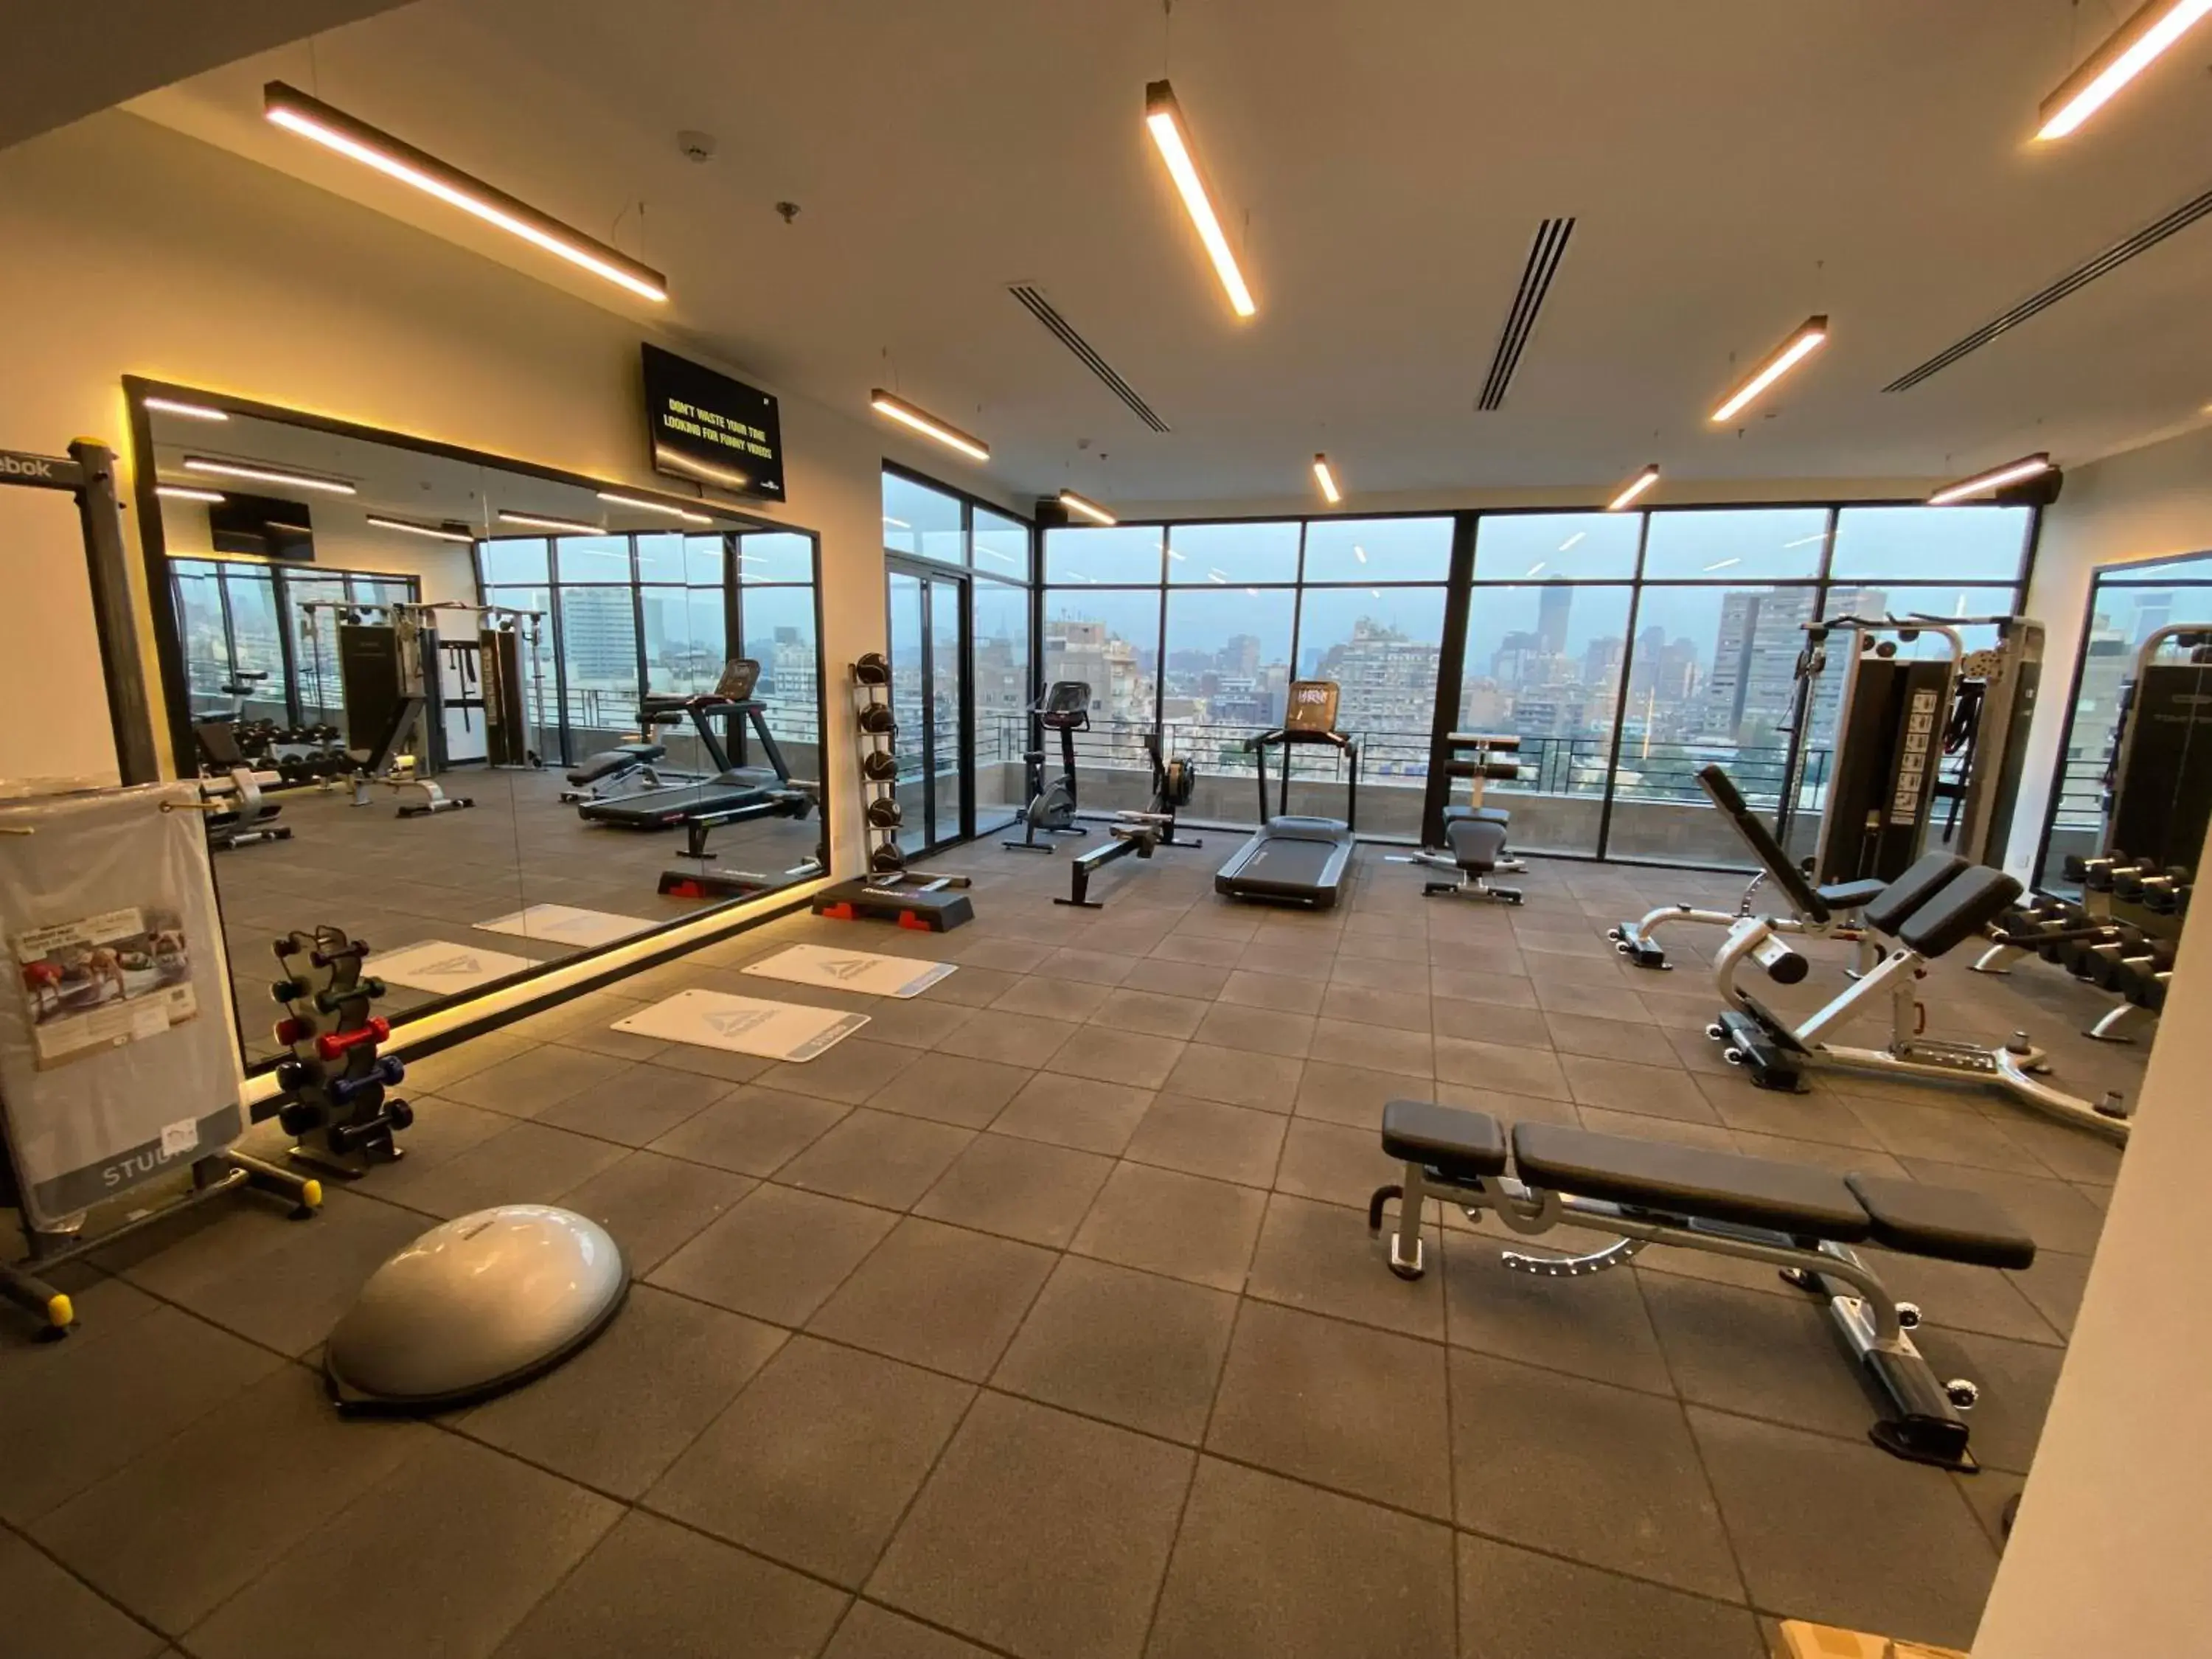 Fitness centre/facilities, Fitness Center/Facilities in New President Hotel Zamalek